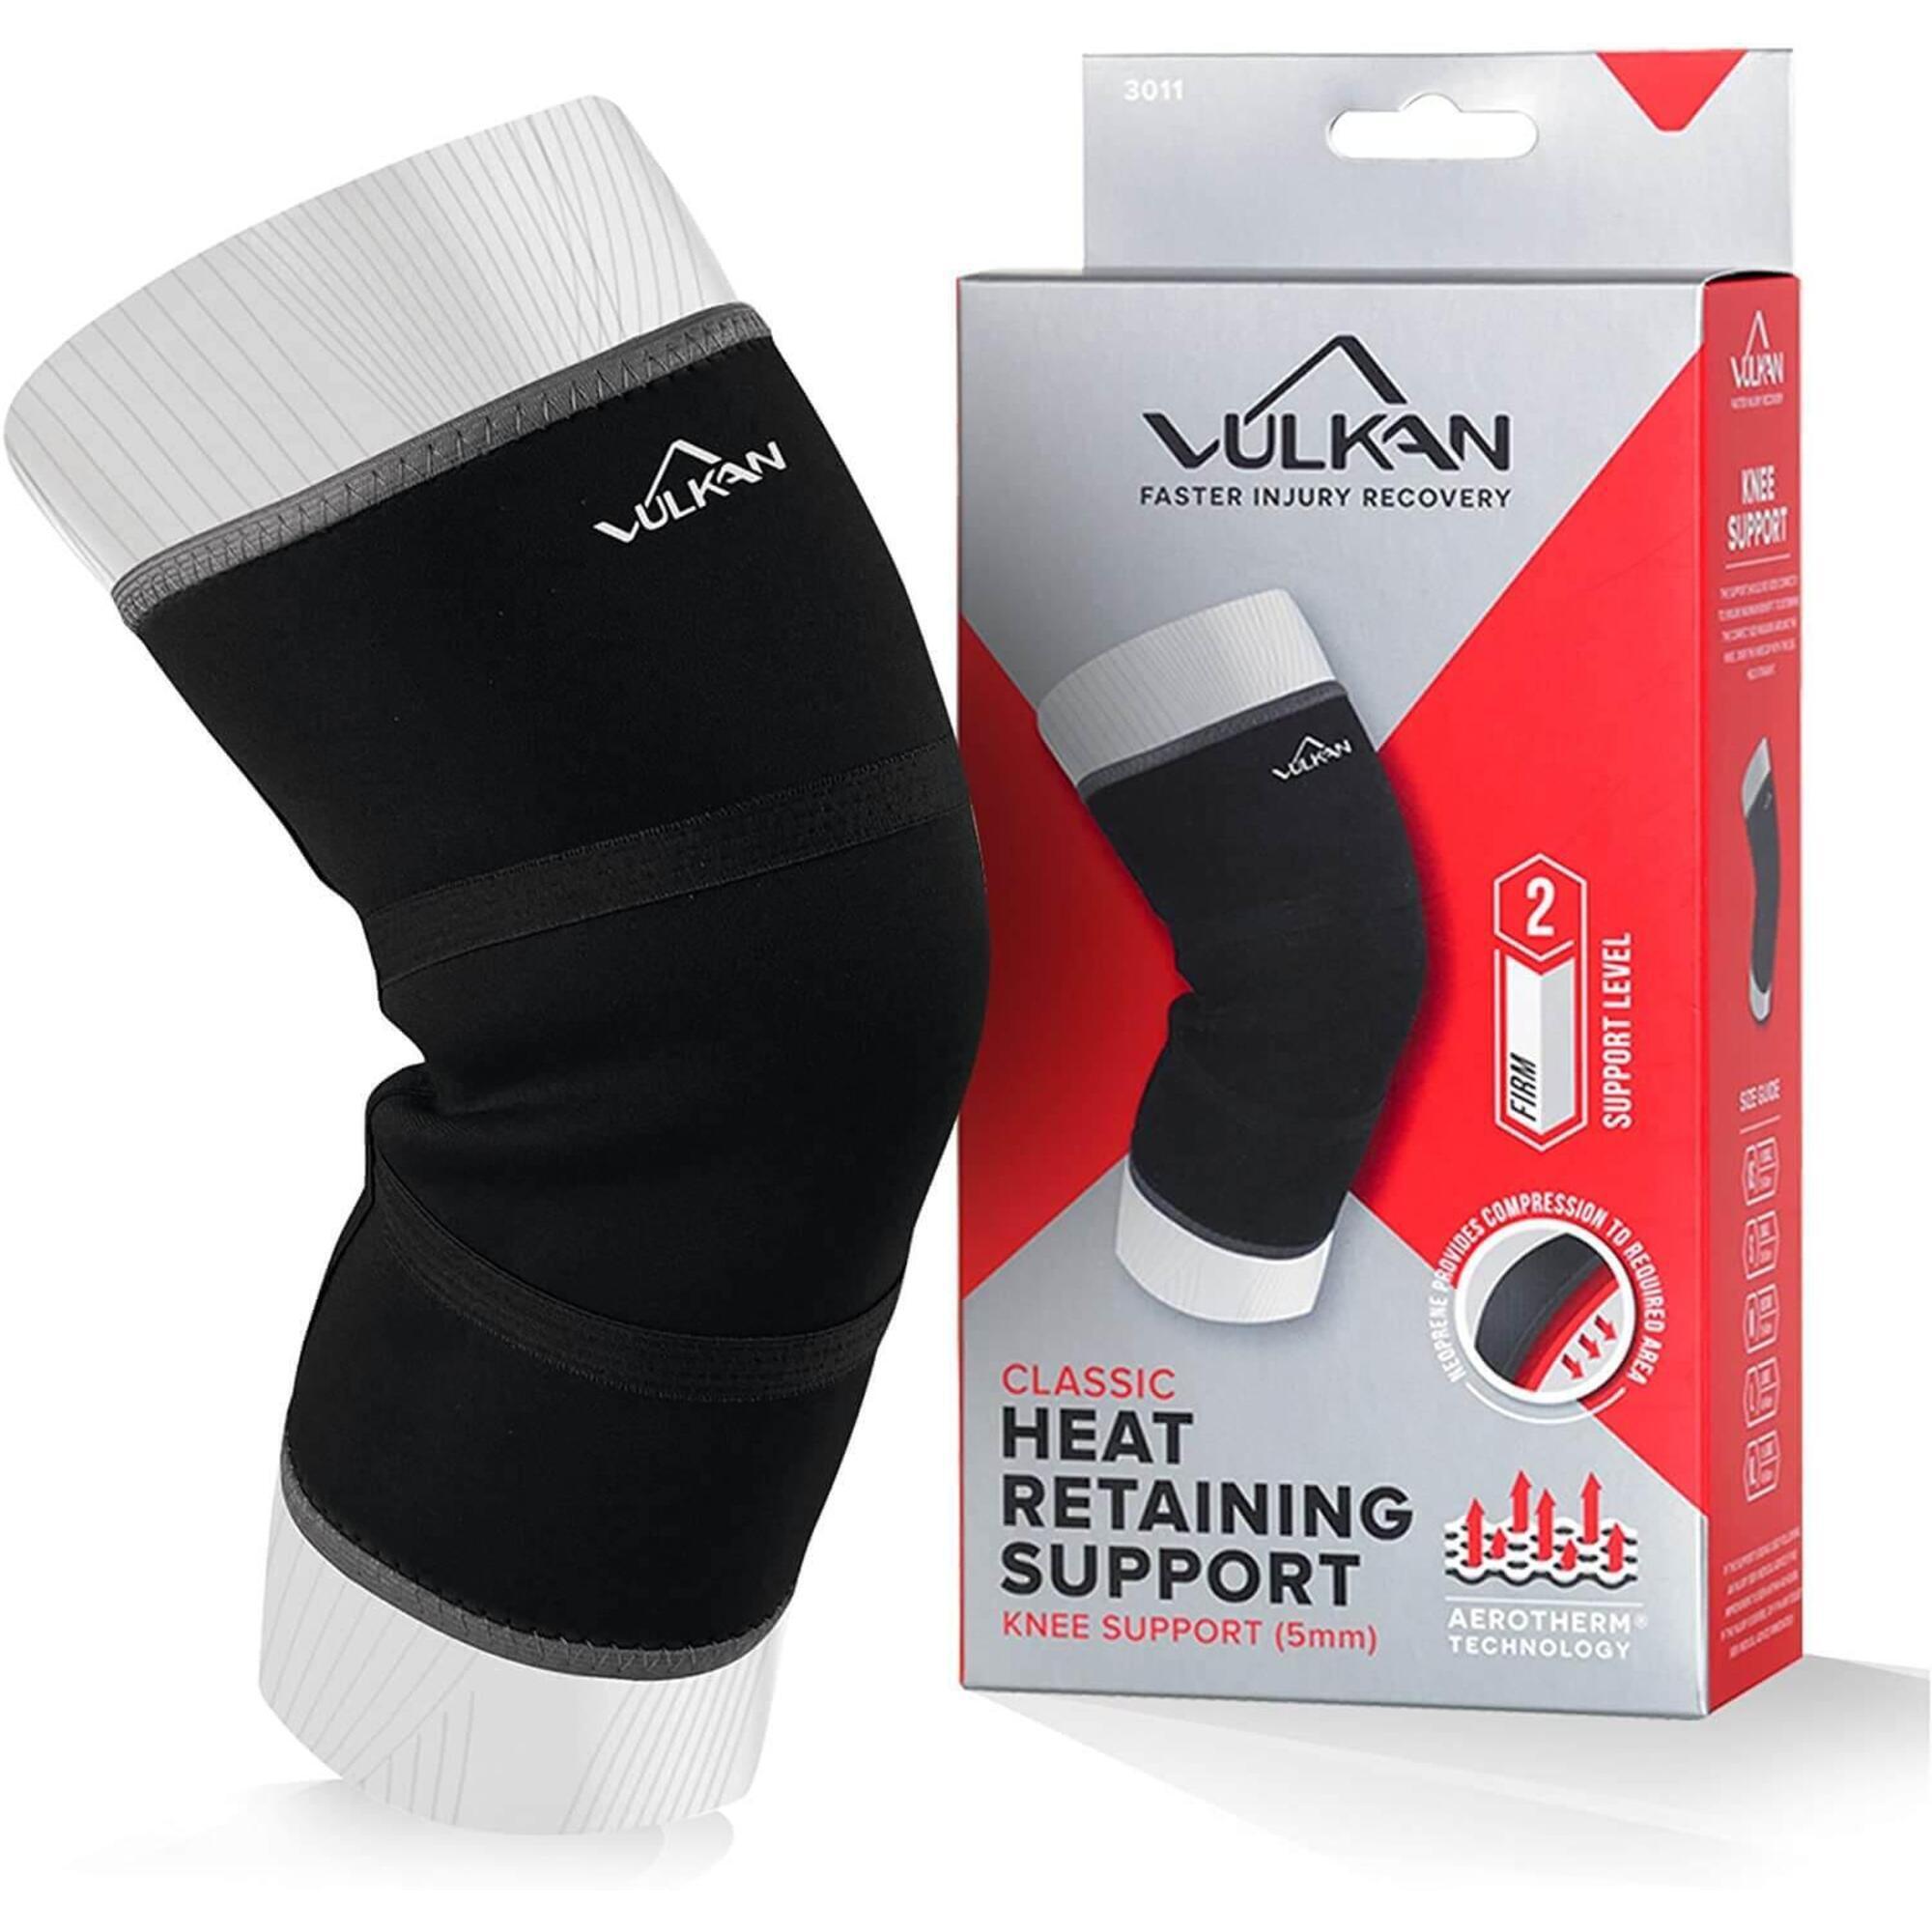 Vulkan Classic Knee Support Brace, 5mm 1/5